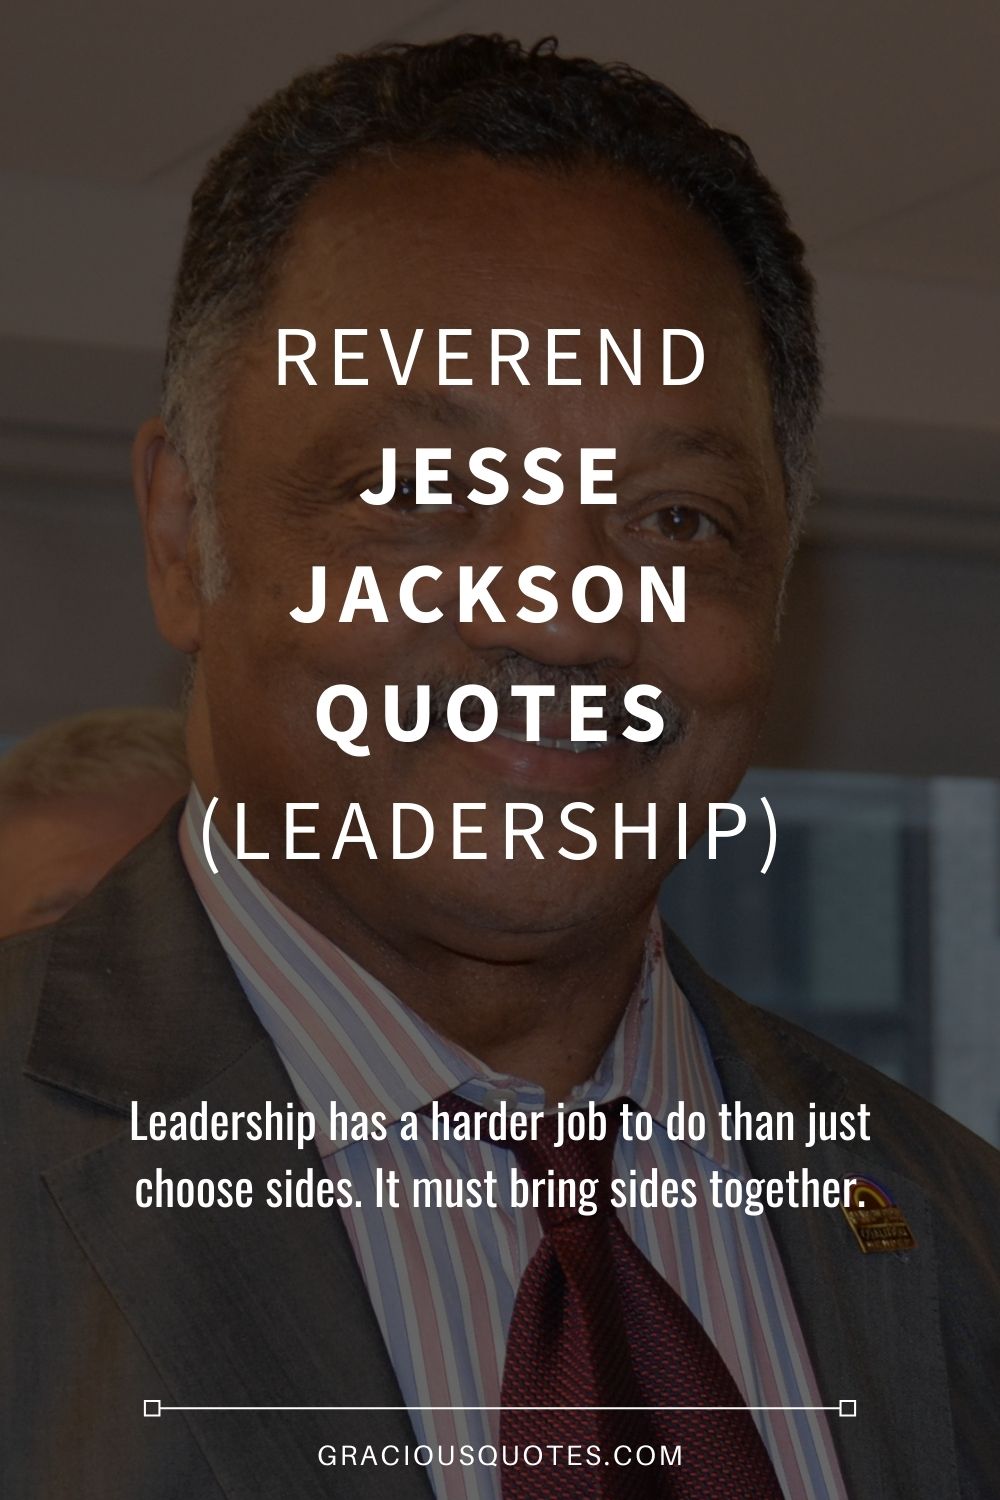 38 Reverend Jesse Jackson Quotes (LEADERSHIP)